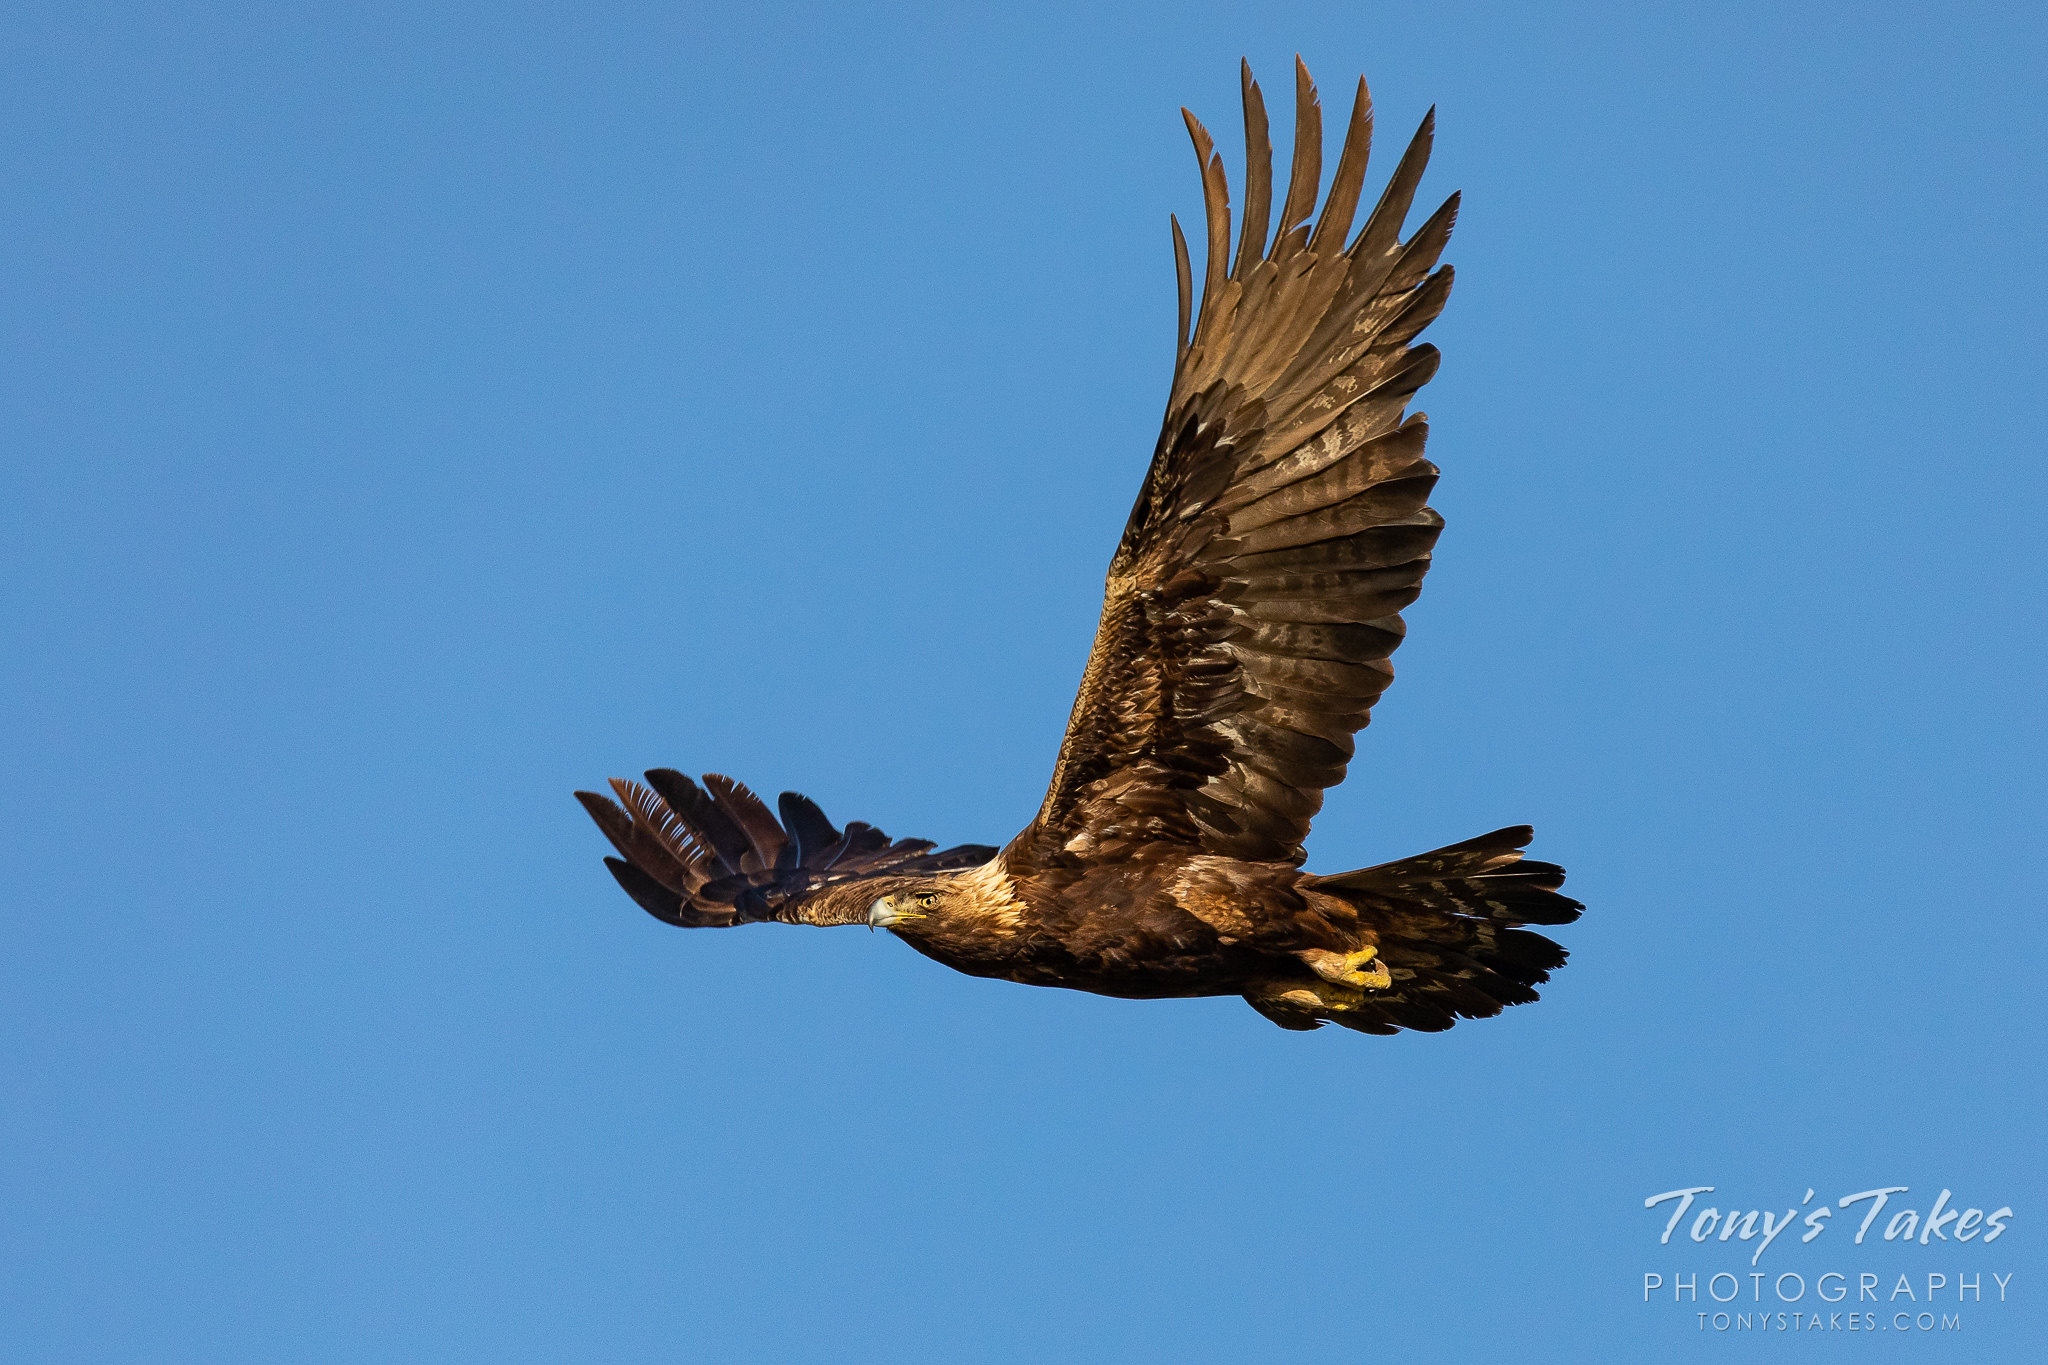 Gorgeous golden eagle flies across the blue skies of Colorado